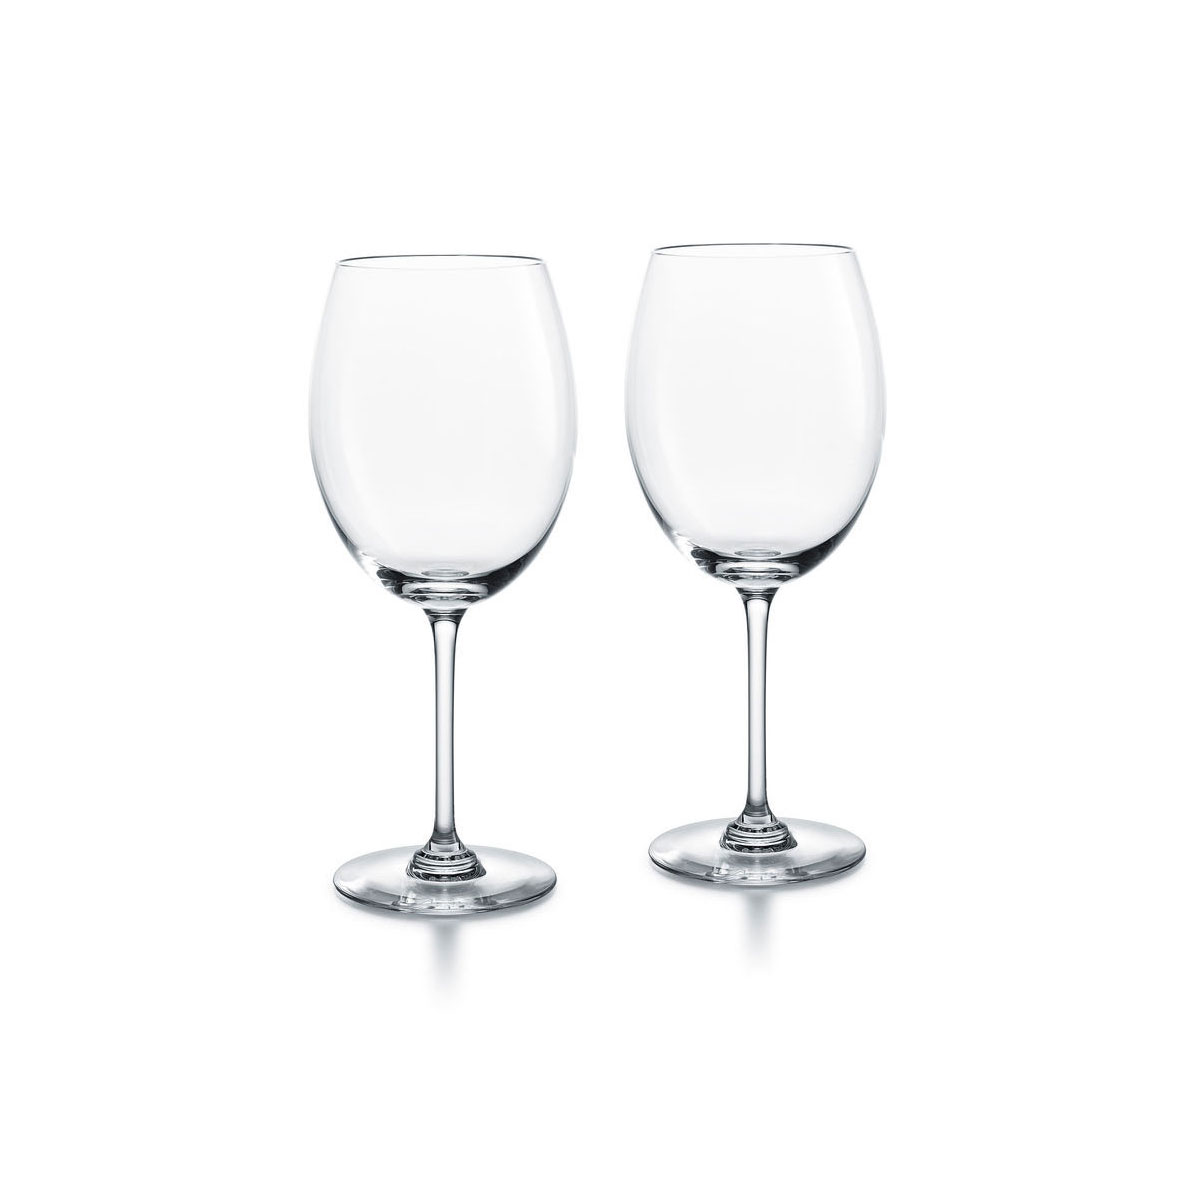 Baccarat Crystal, Oenologie Red Bordeaux Glasses, Pair